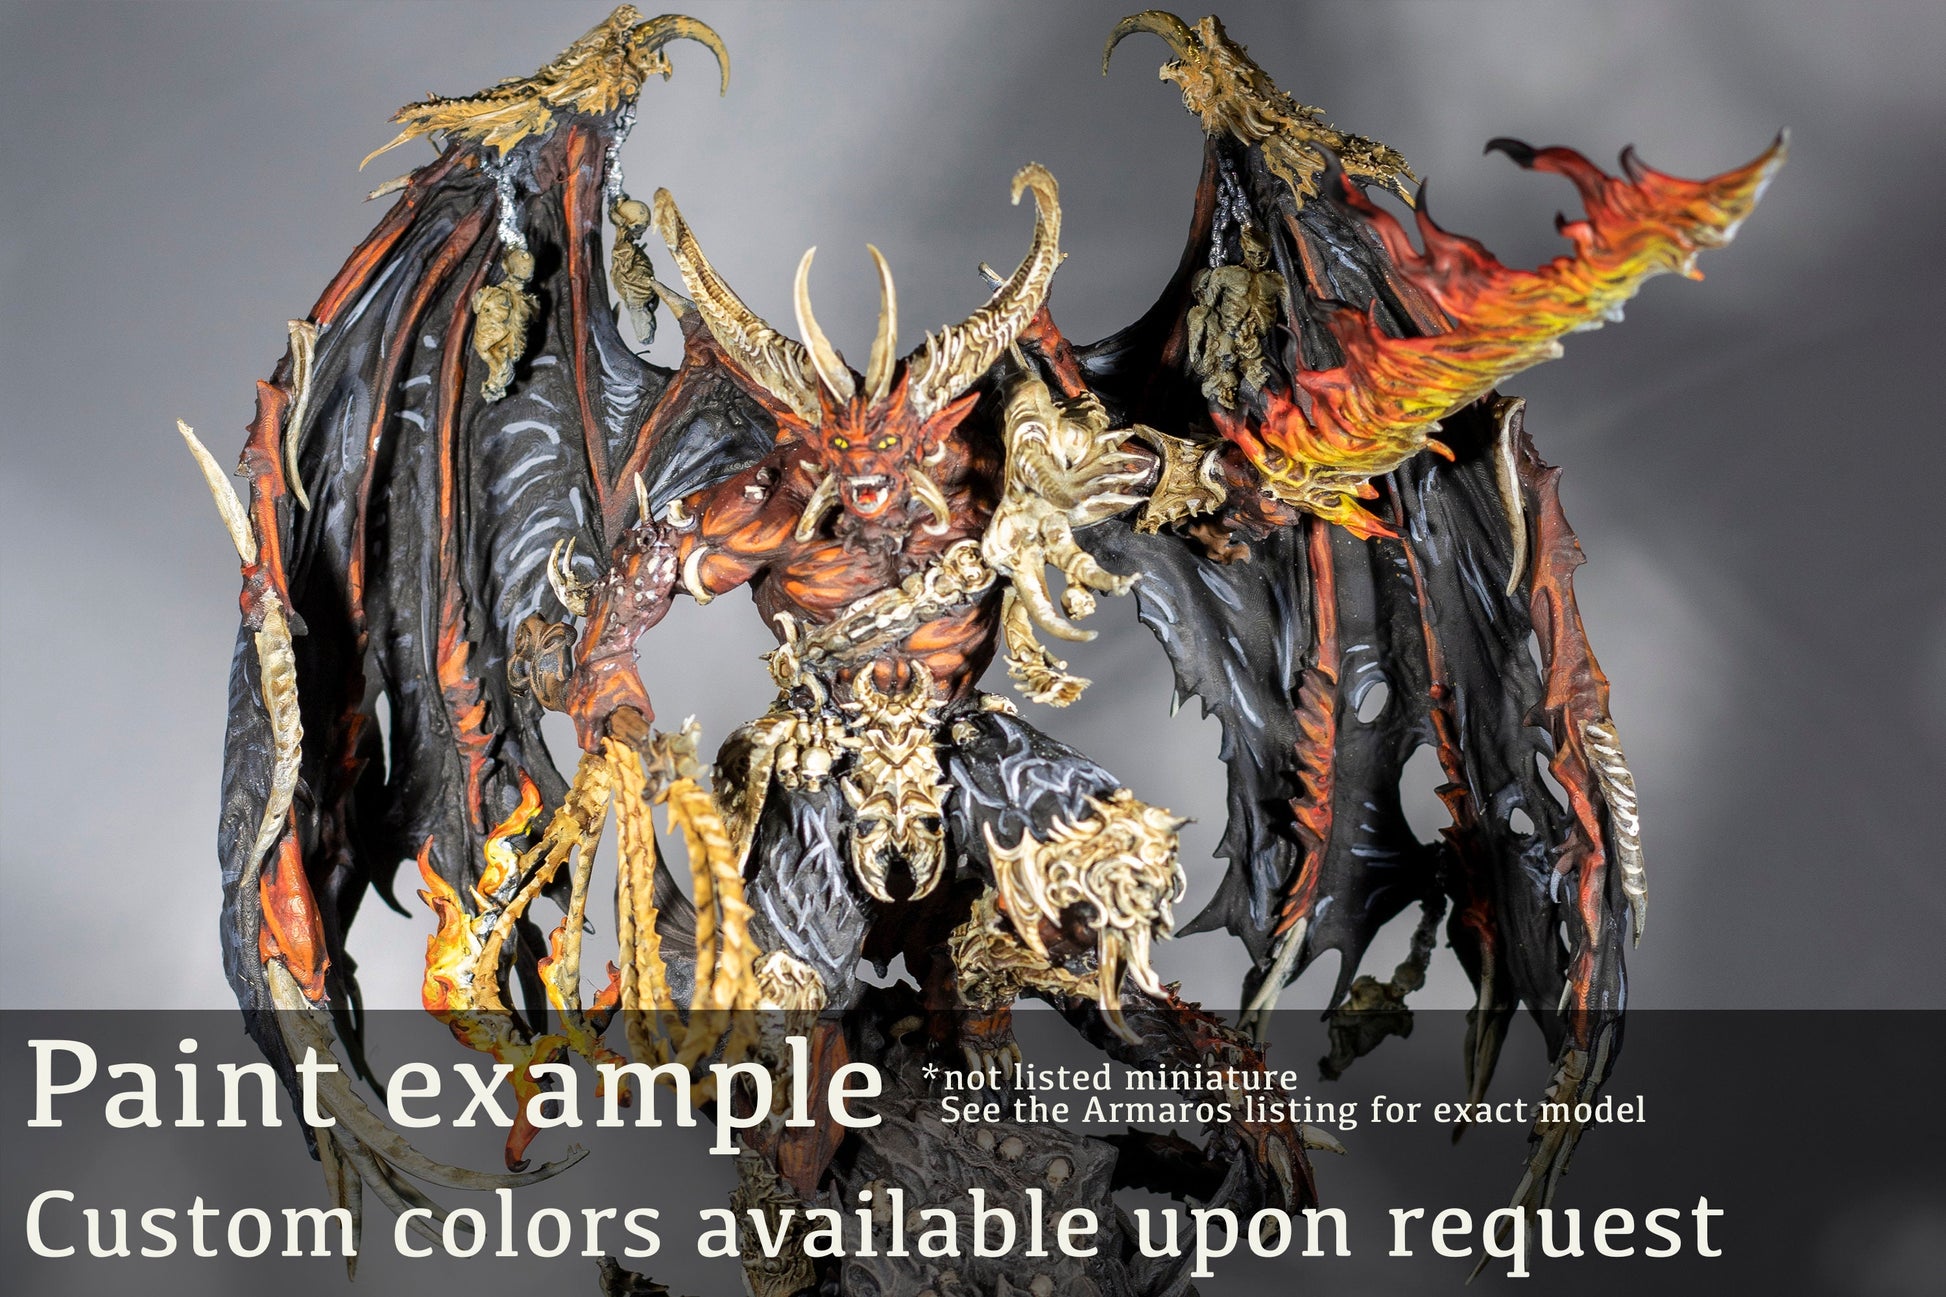 Cursed Chromunculus - Mini Monster Mayhem Printed Miniature | Dungeons & Dragons | Pathfinder | Tabletop